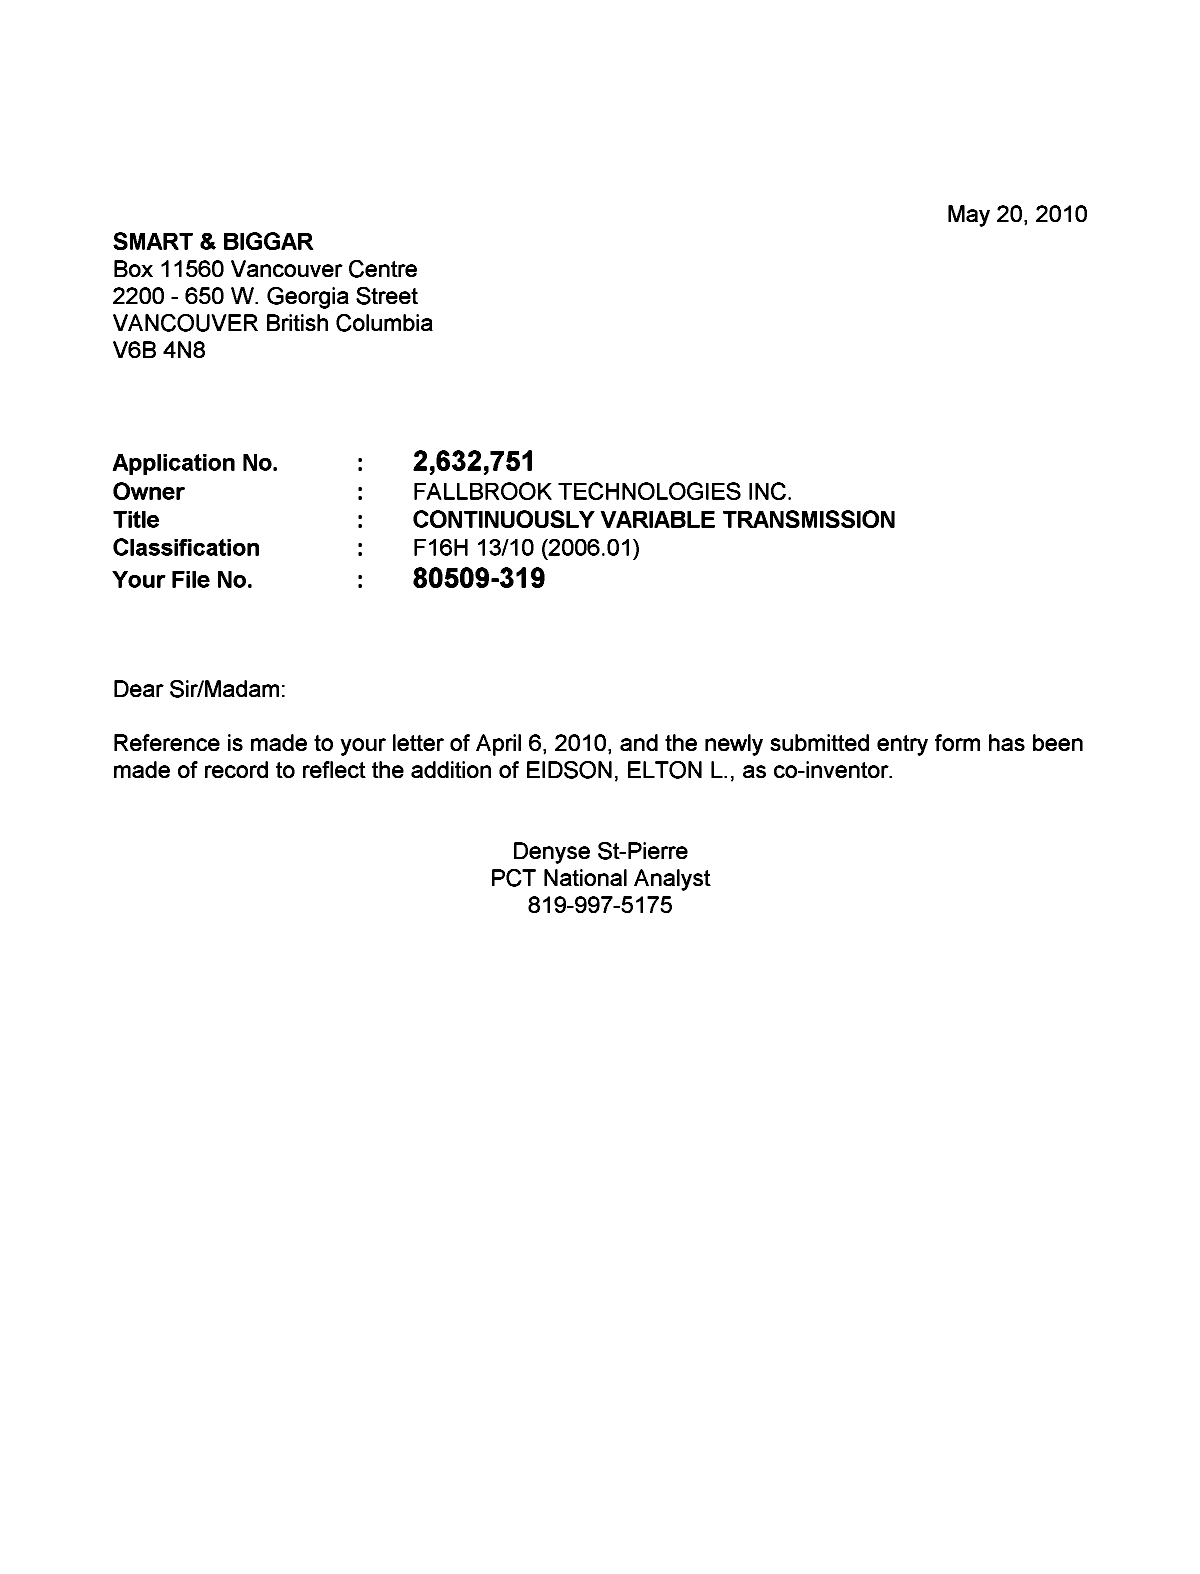 Canadian Patent Document 2632751. Correspondence 20100520. Image 1 of 1